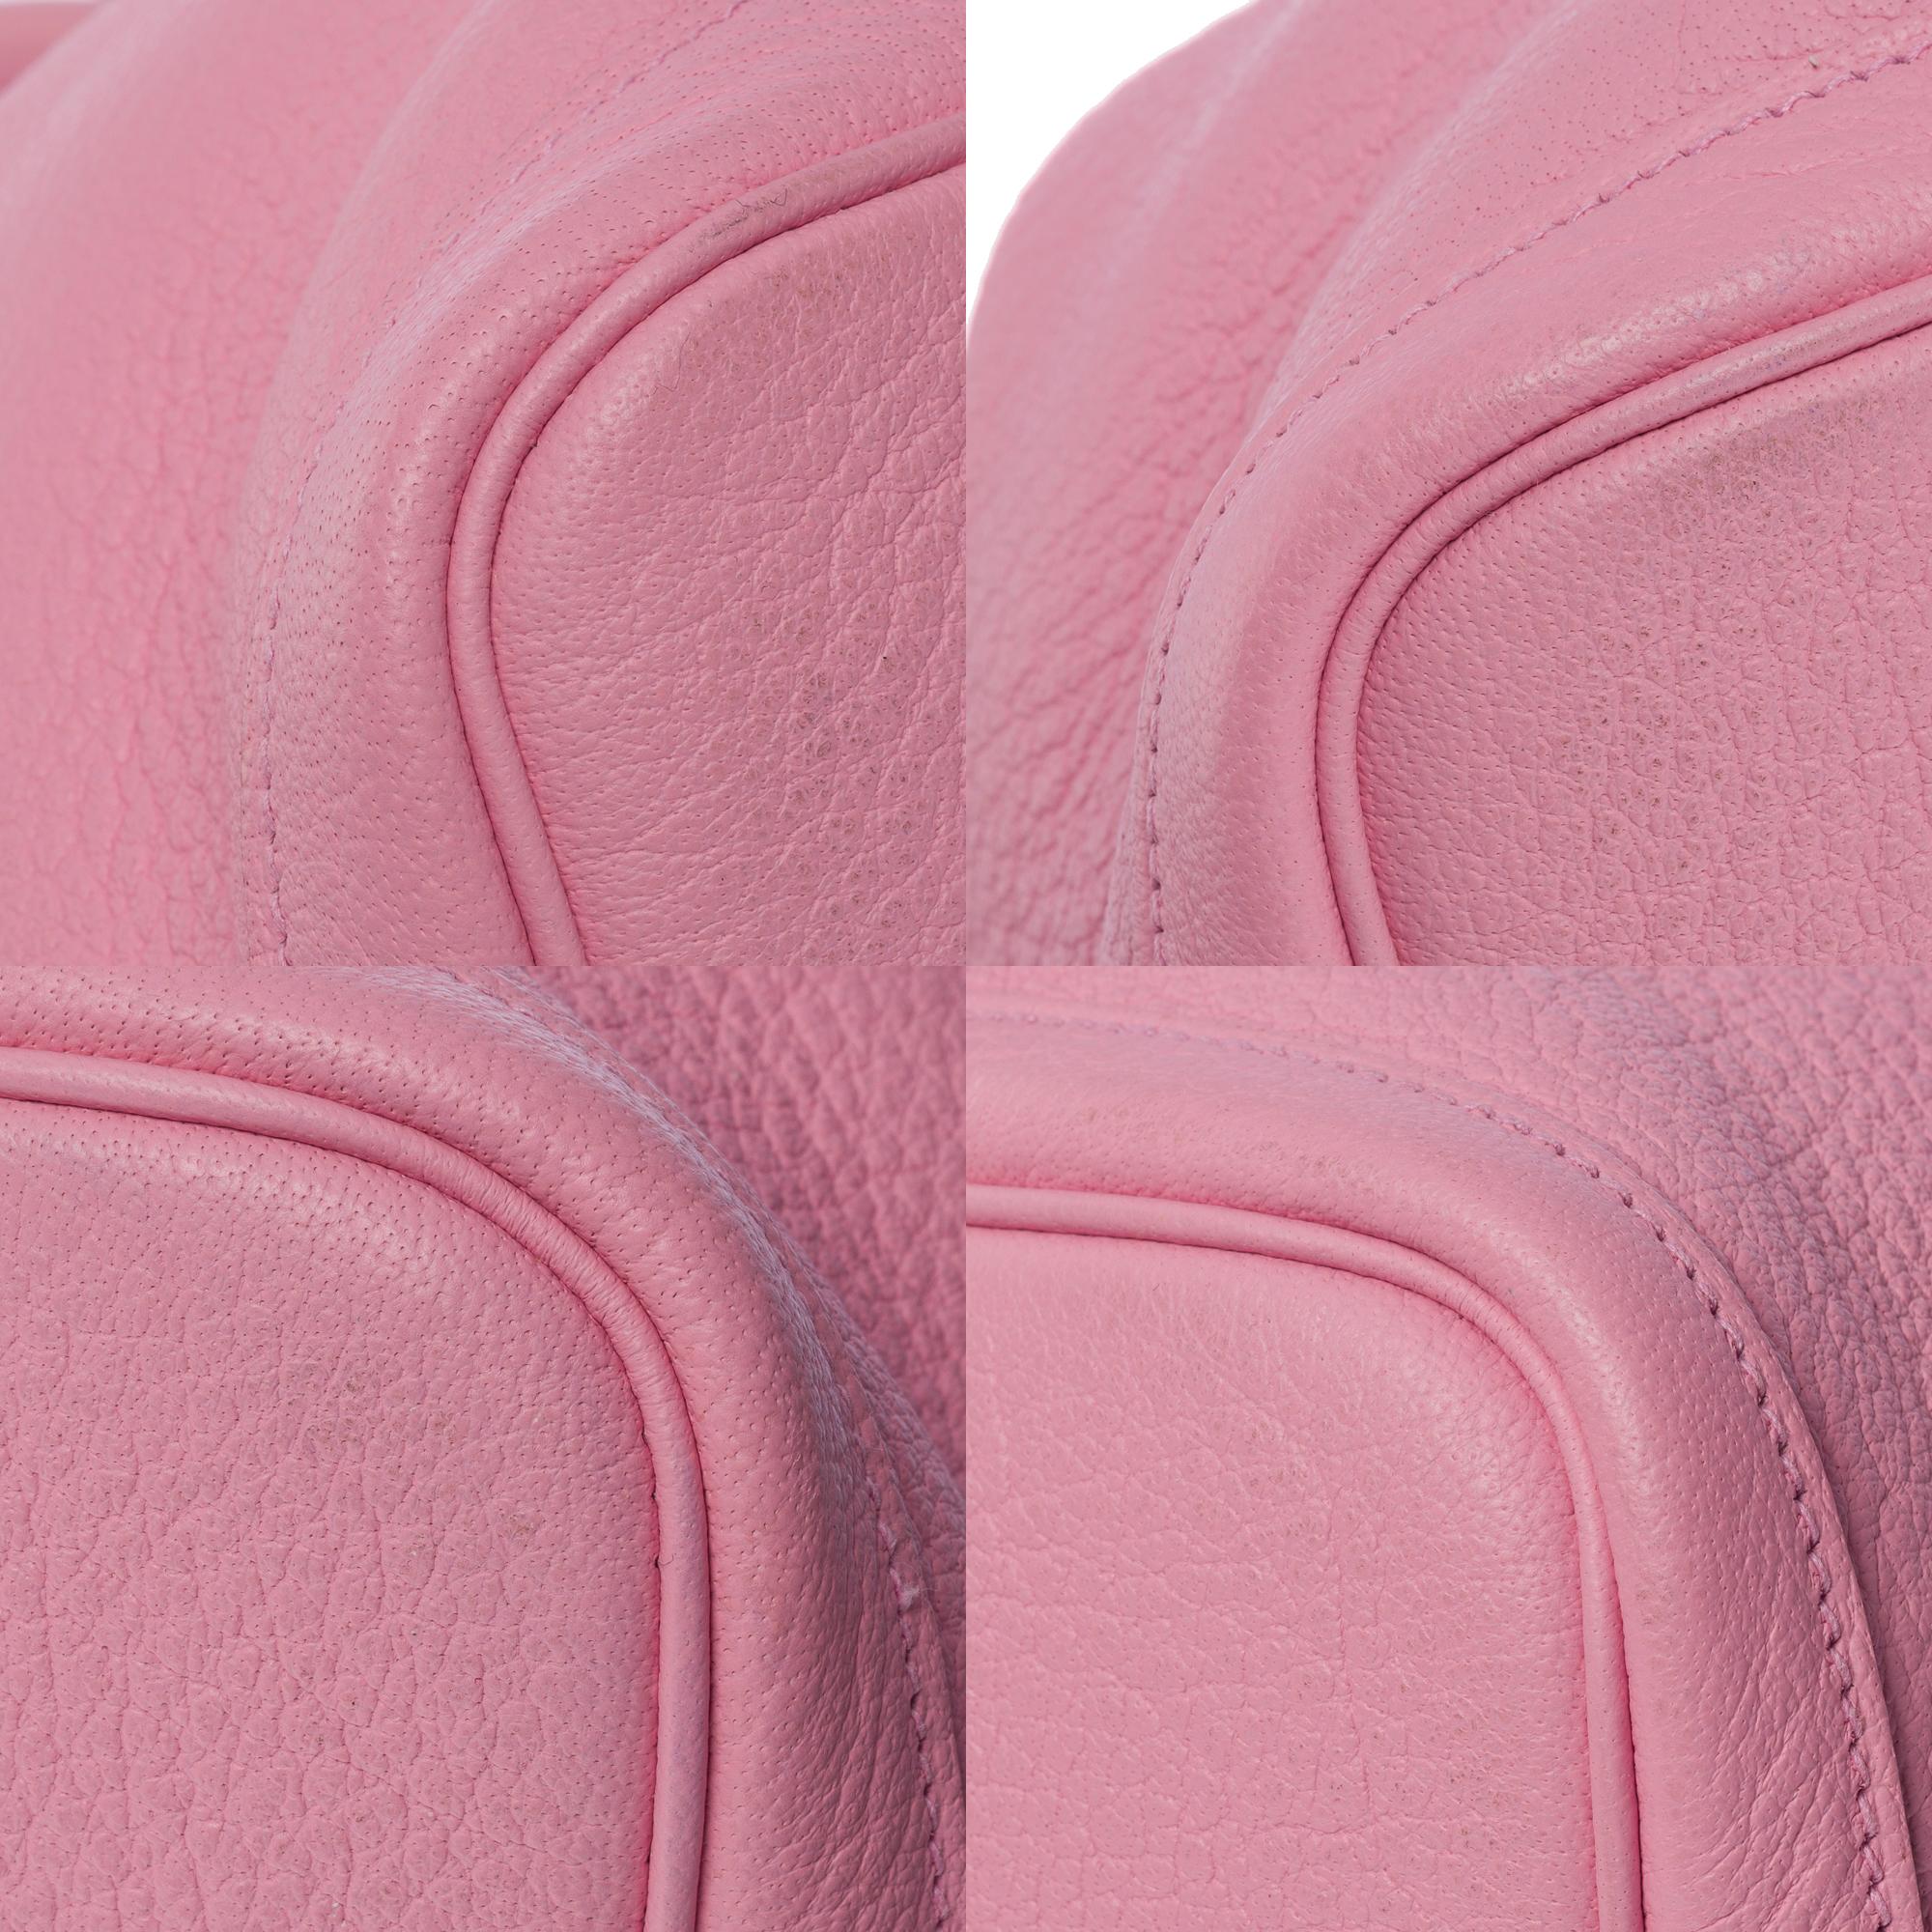 Gorgeous Hermès Garden Party 36 Tote bag in Sakura Pink Negonda leather, SHW 6